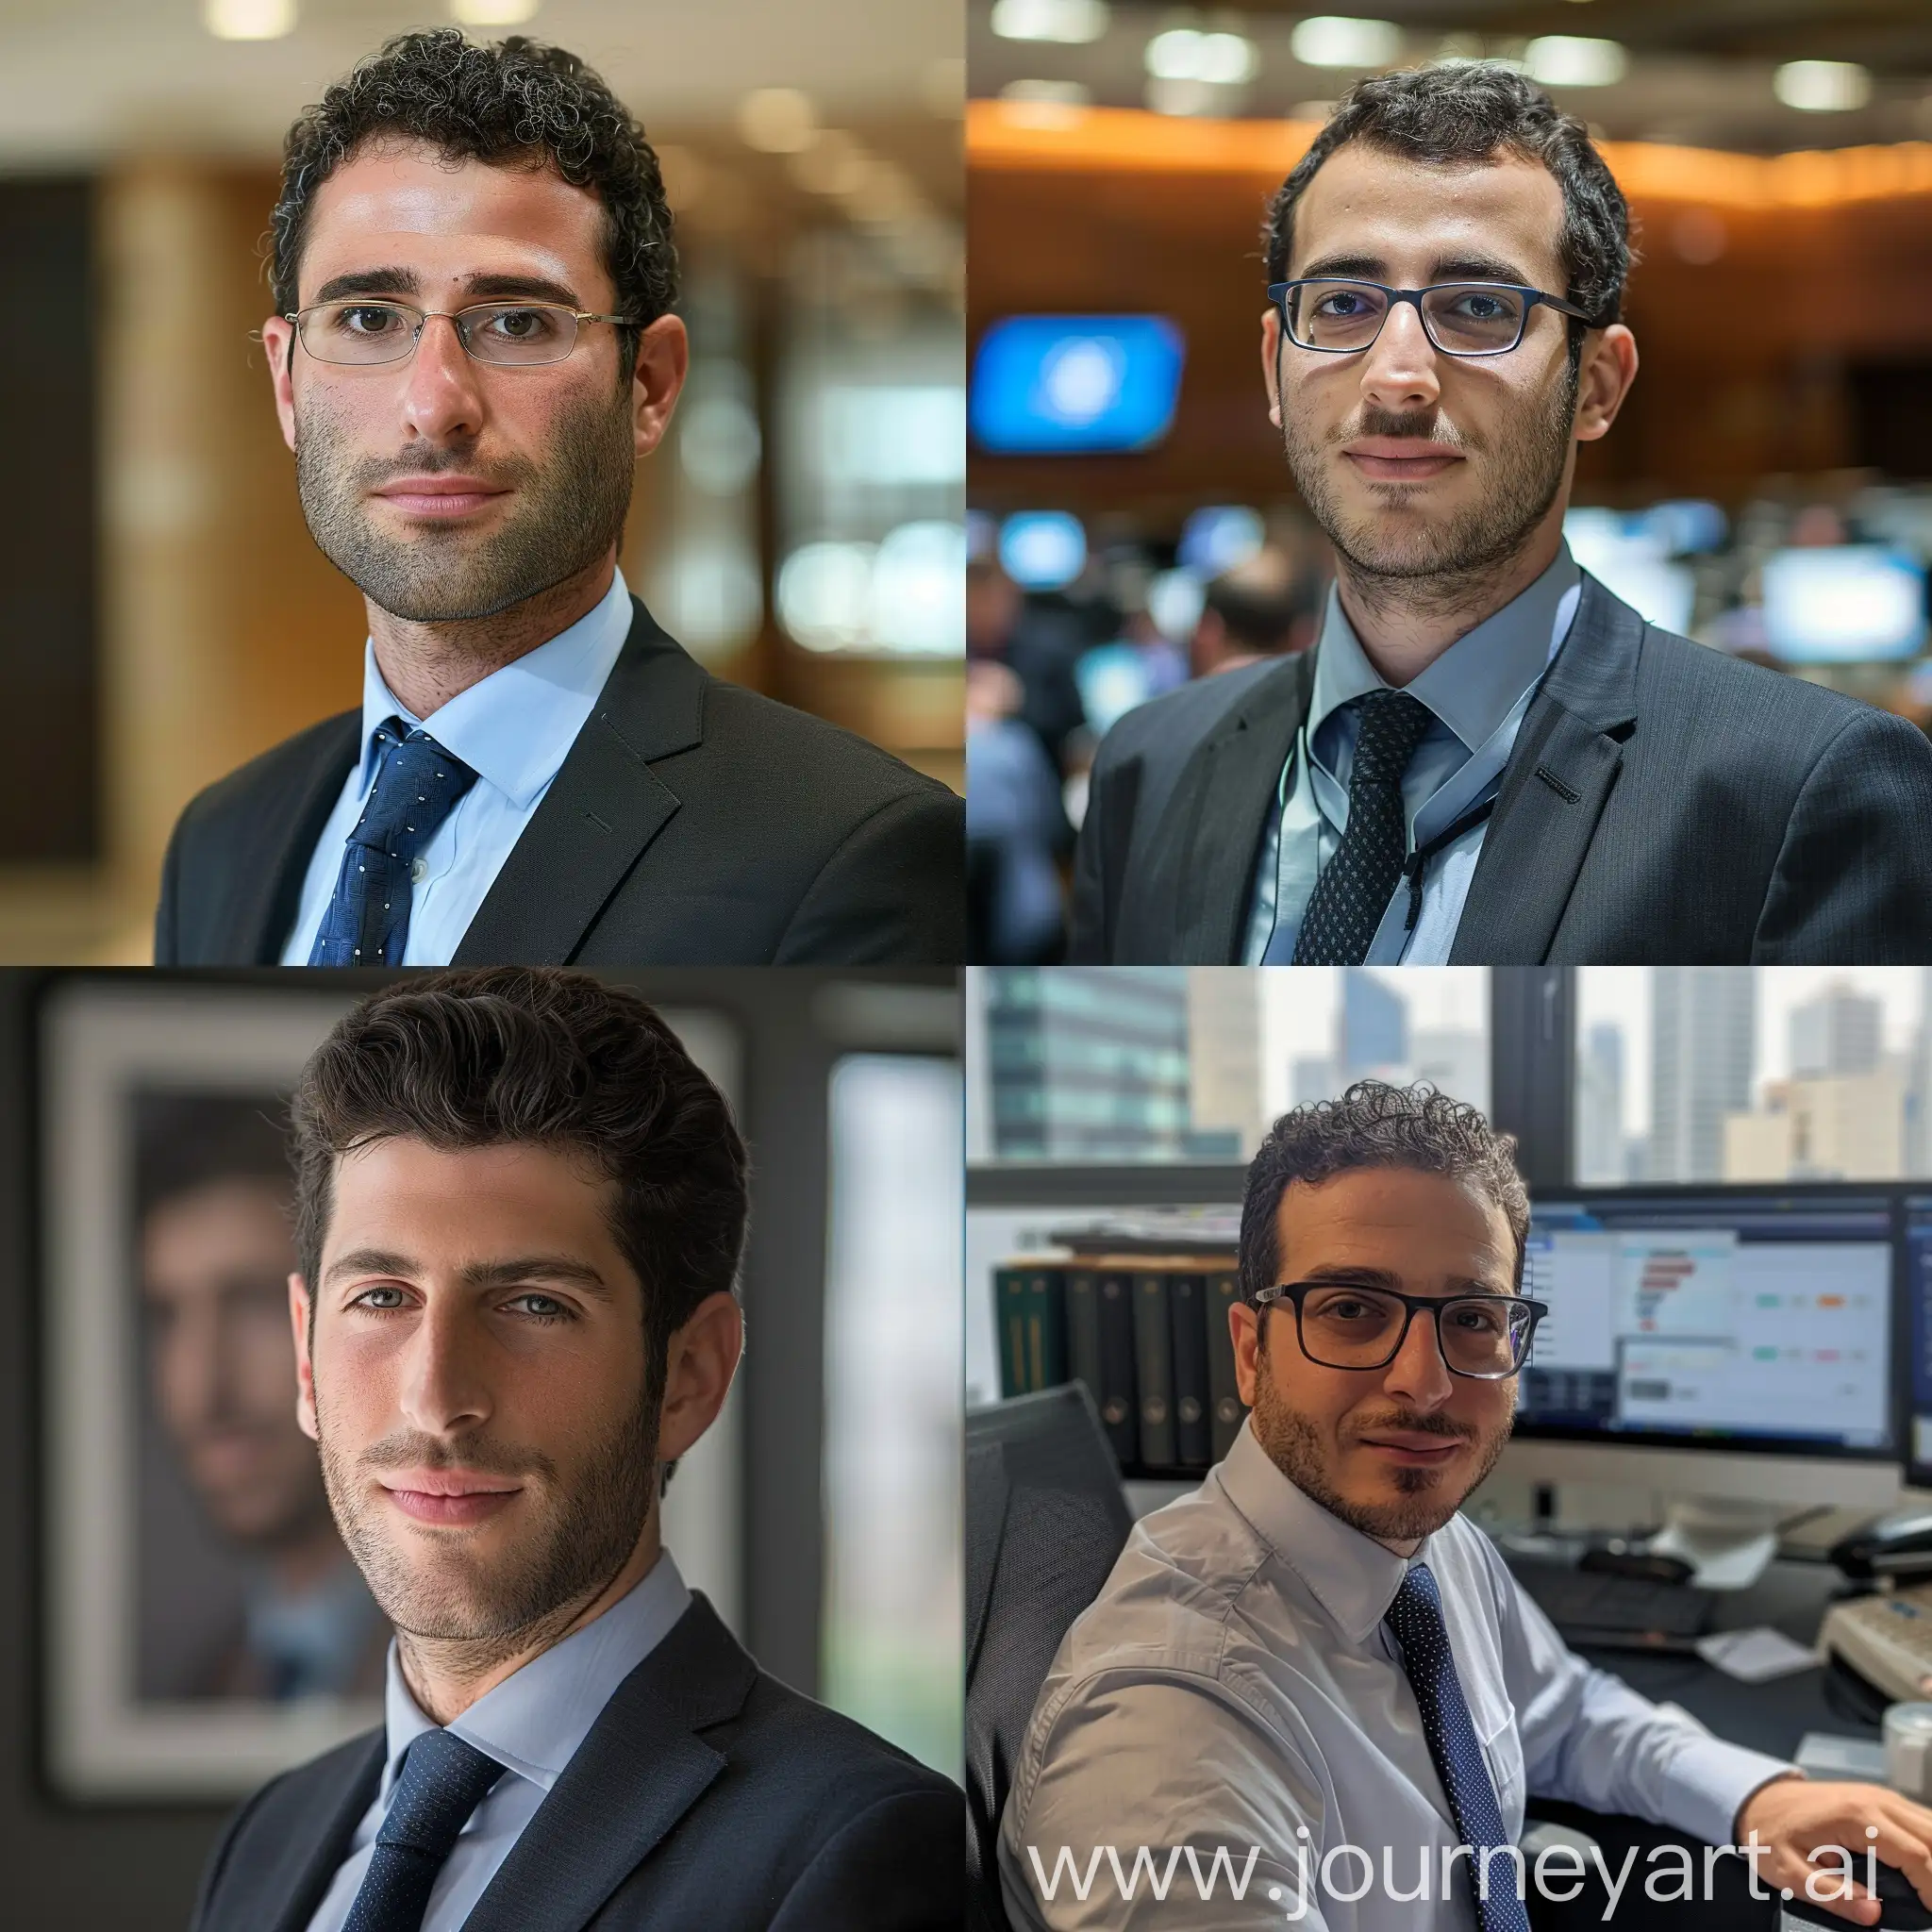 Israel-Securities-Authority-Male-Employee-Portrait